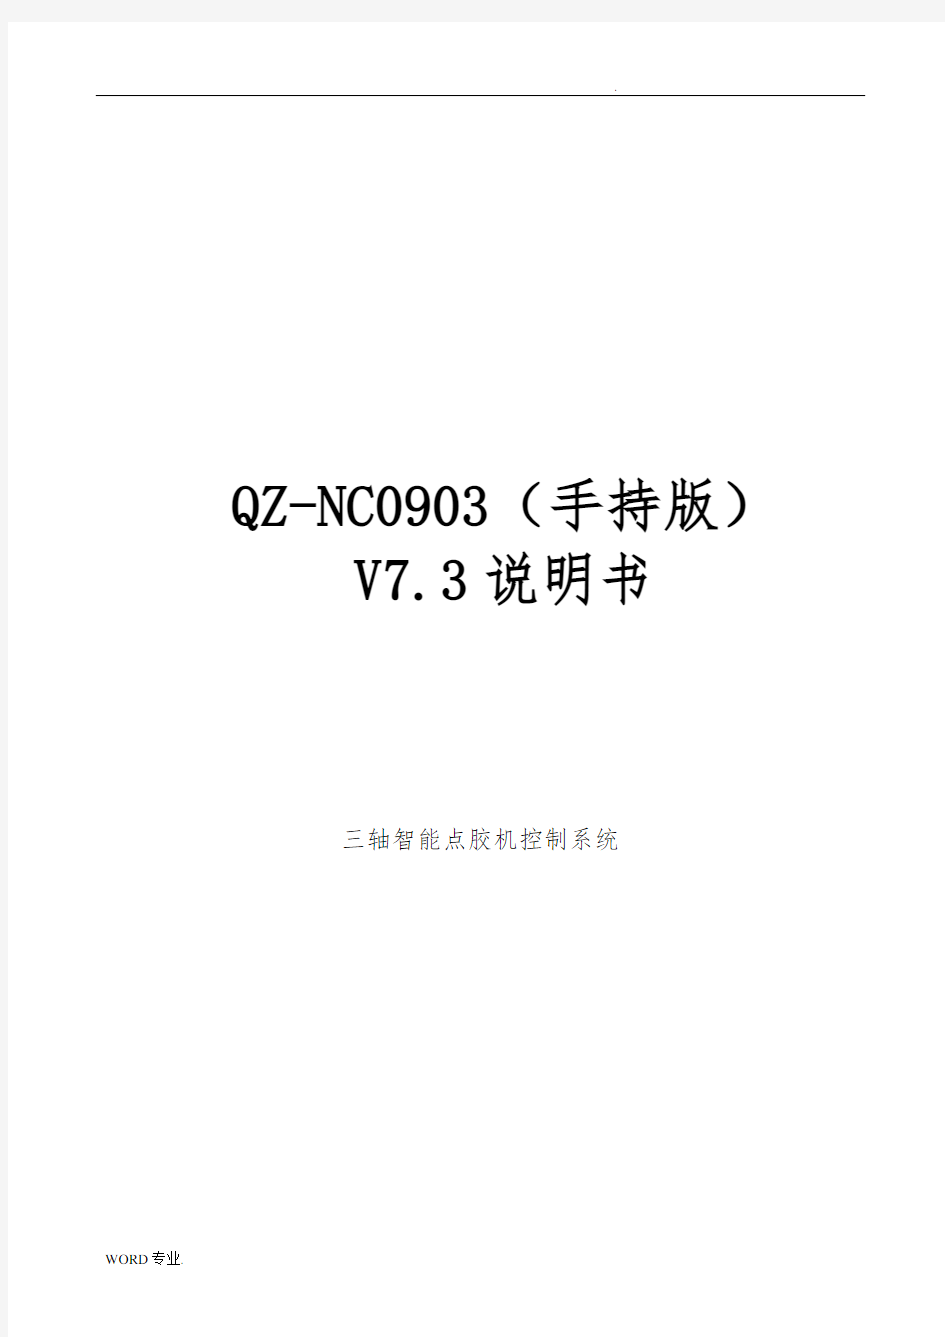 QZ_NC0903点胶机说明书V7.3_OK